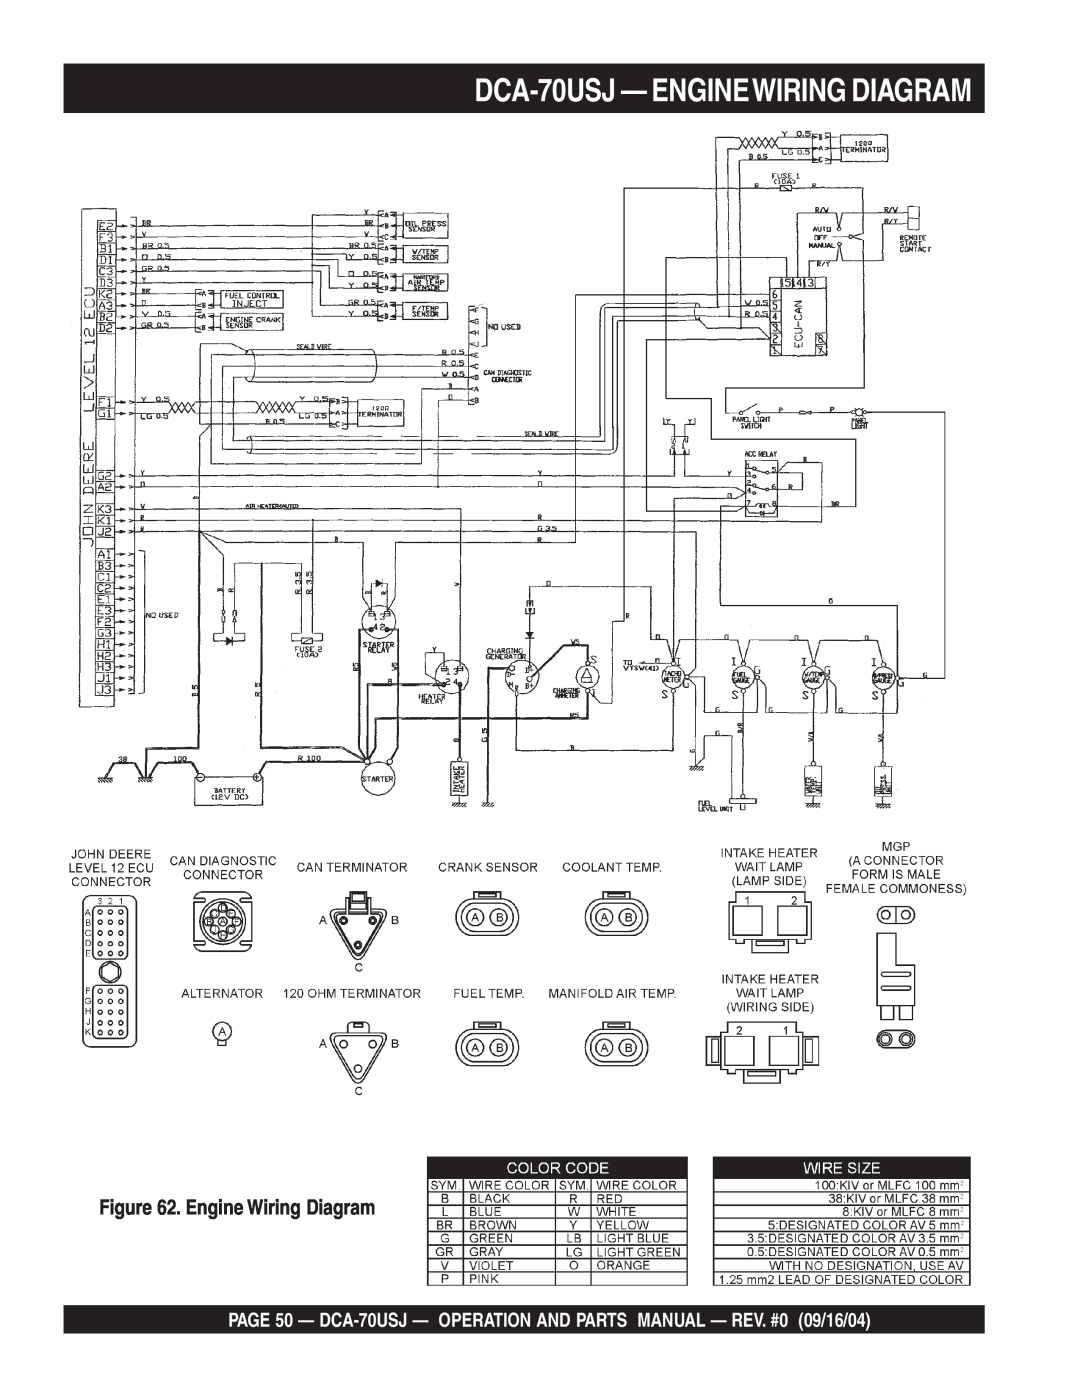 Multiquip dca-70usj operation manual DCA-70USJ— ENGINEWIRING DIAGRAM, Engine Wiring Diagram 